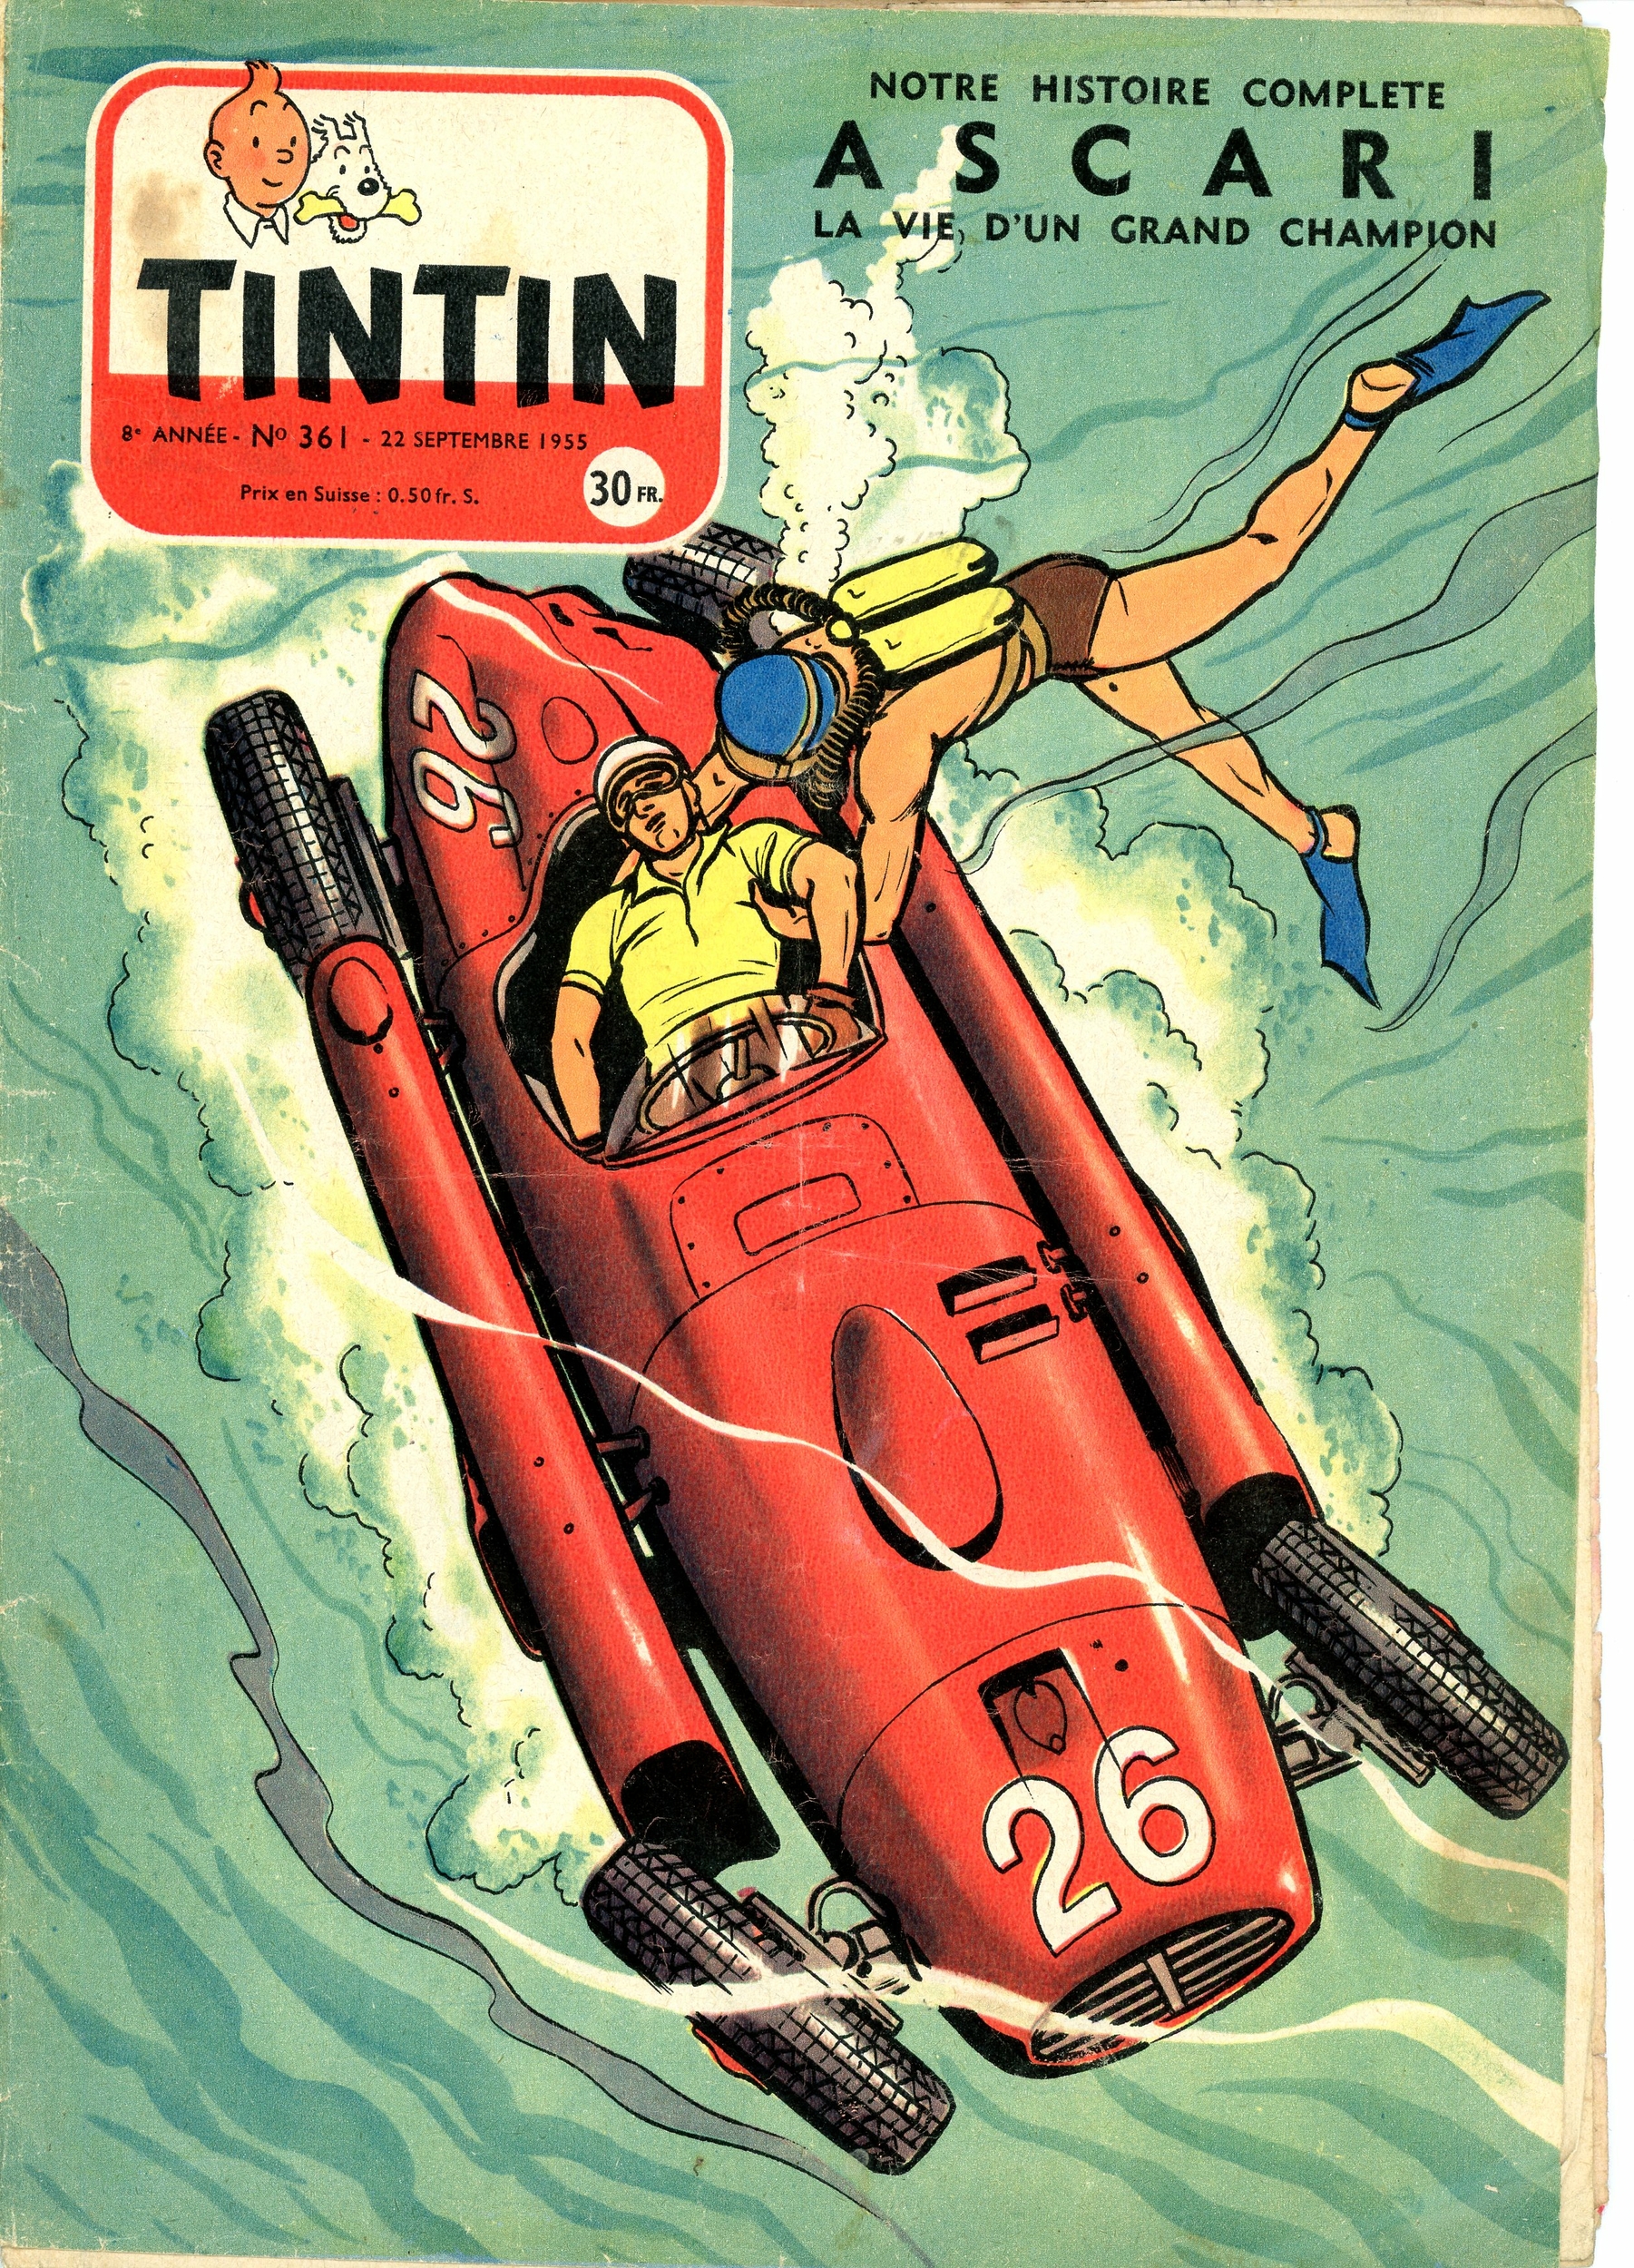 JOURNAL DE TINTIN n° 361 - TINTIN ACTUALITÉS 1955 - AFFAIRE TOURNESOL